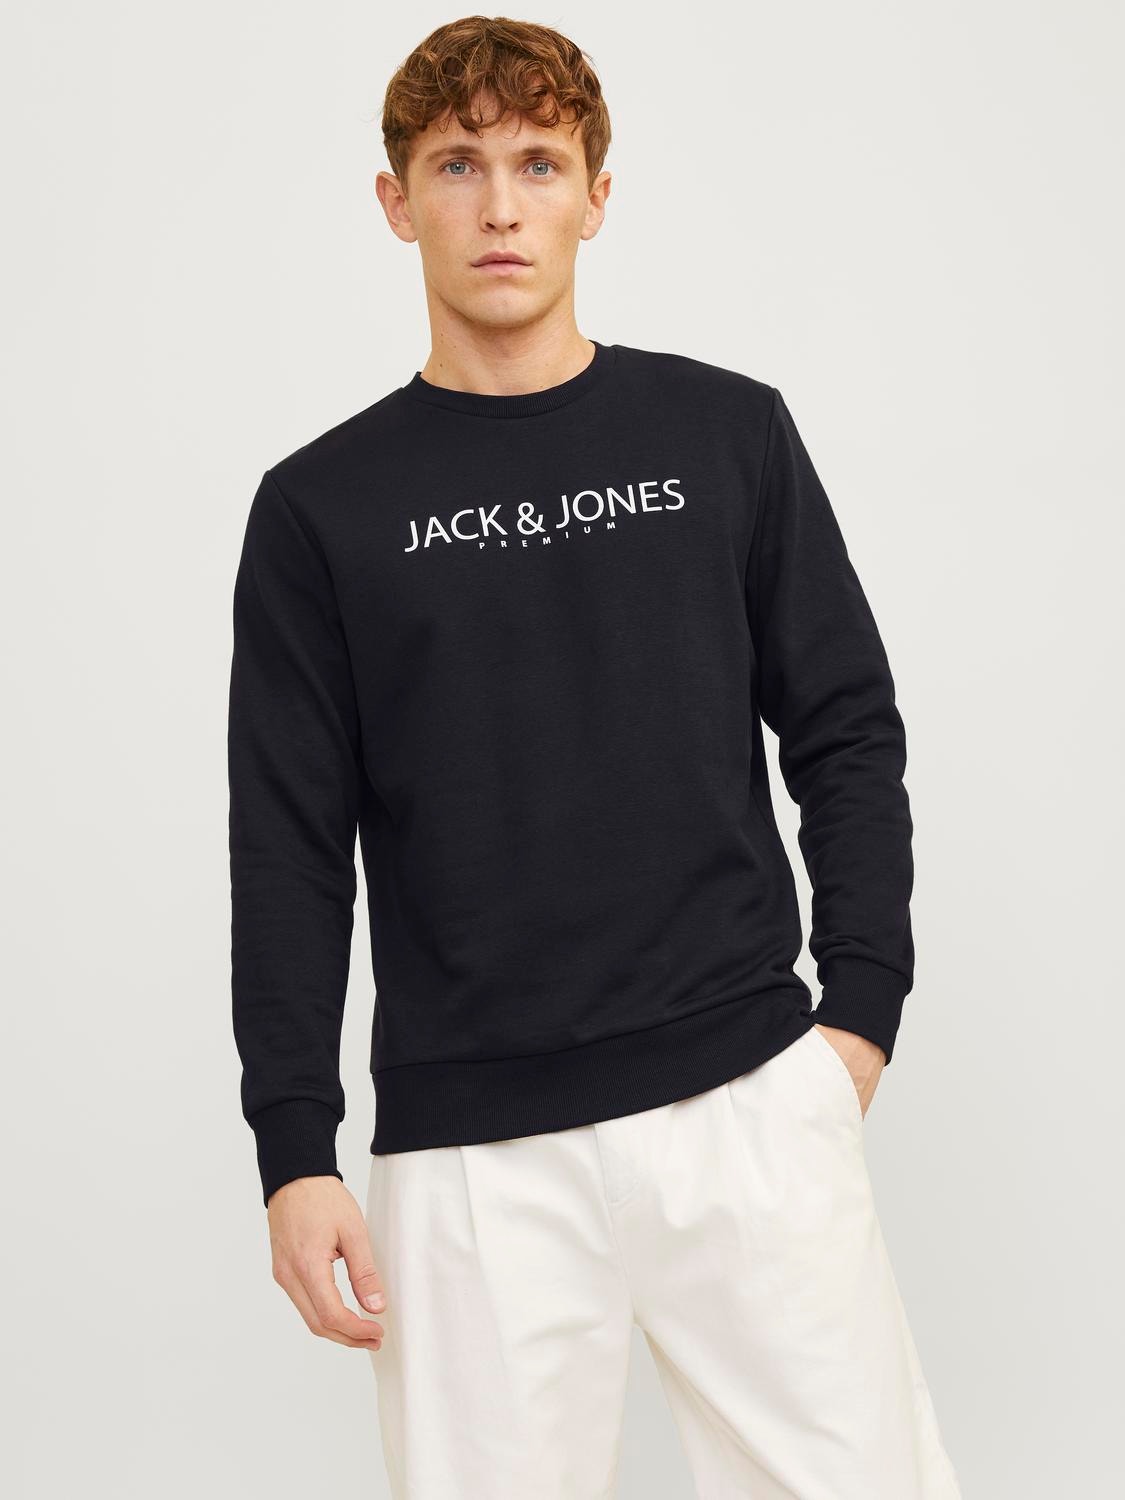 Jack & Jones Printed Crew neck Sweatshirt -Black Onyx - 12256972